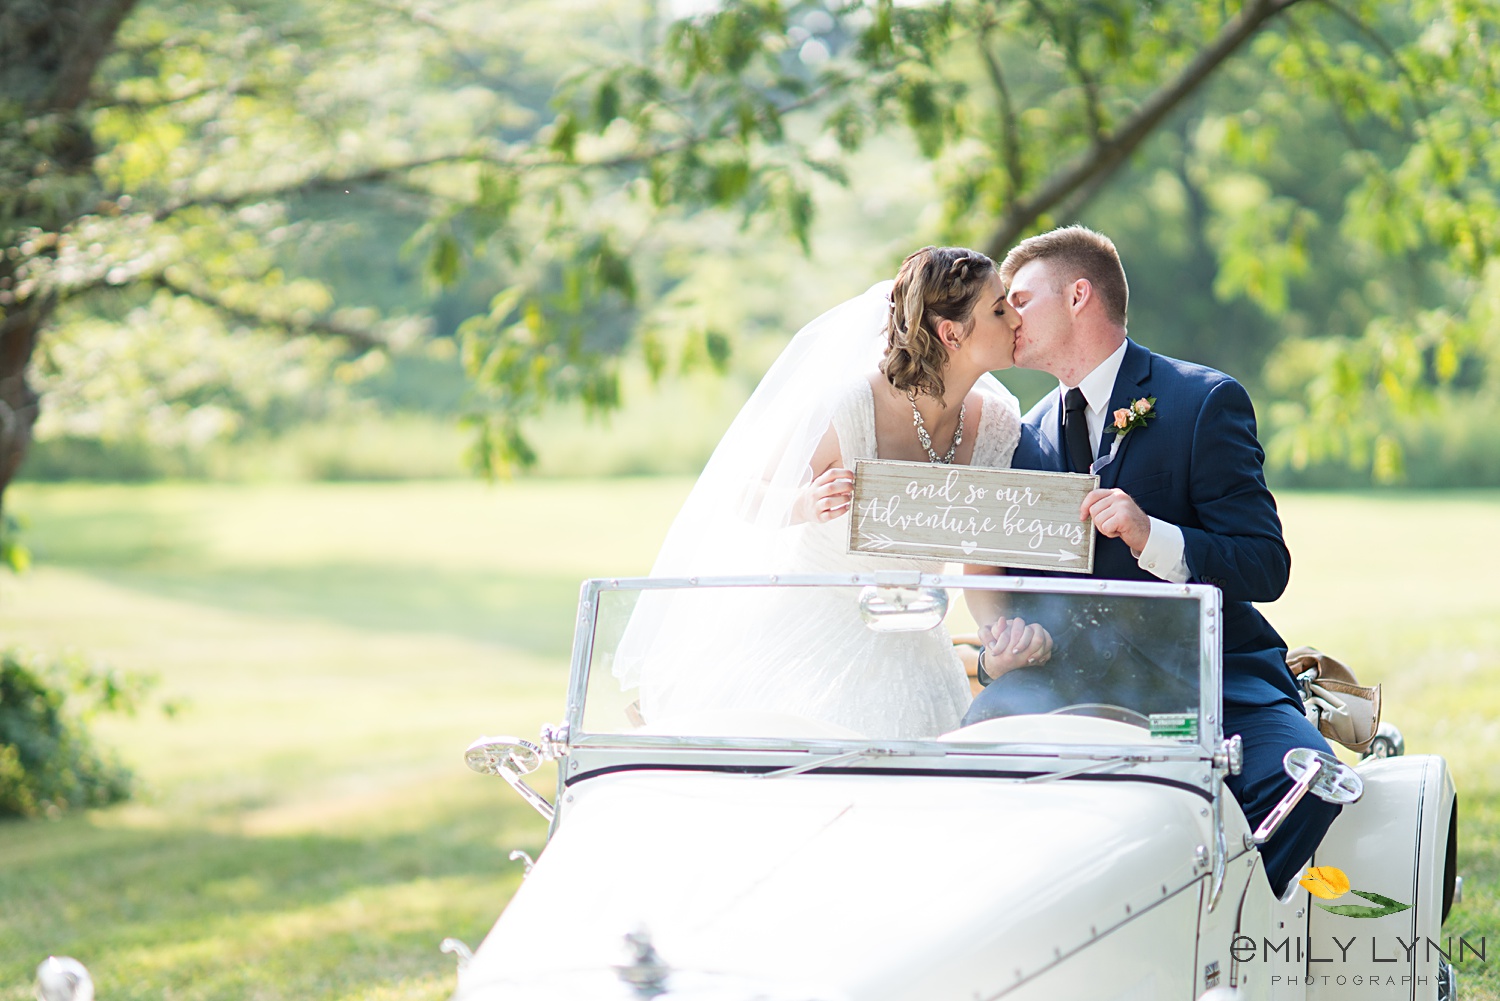 Wedding couple's photo in old car. Wedding-Photos-at-Enchanted-Acres-KC-Wedding-Photographer-Emily-Lynn-Photography.